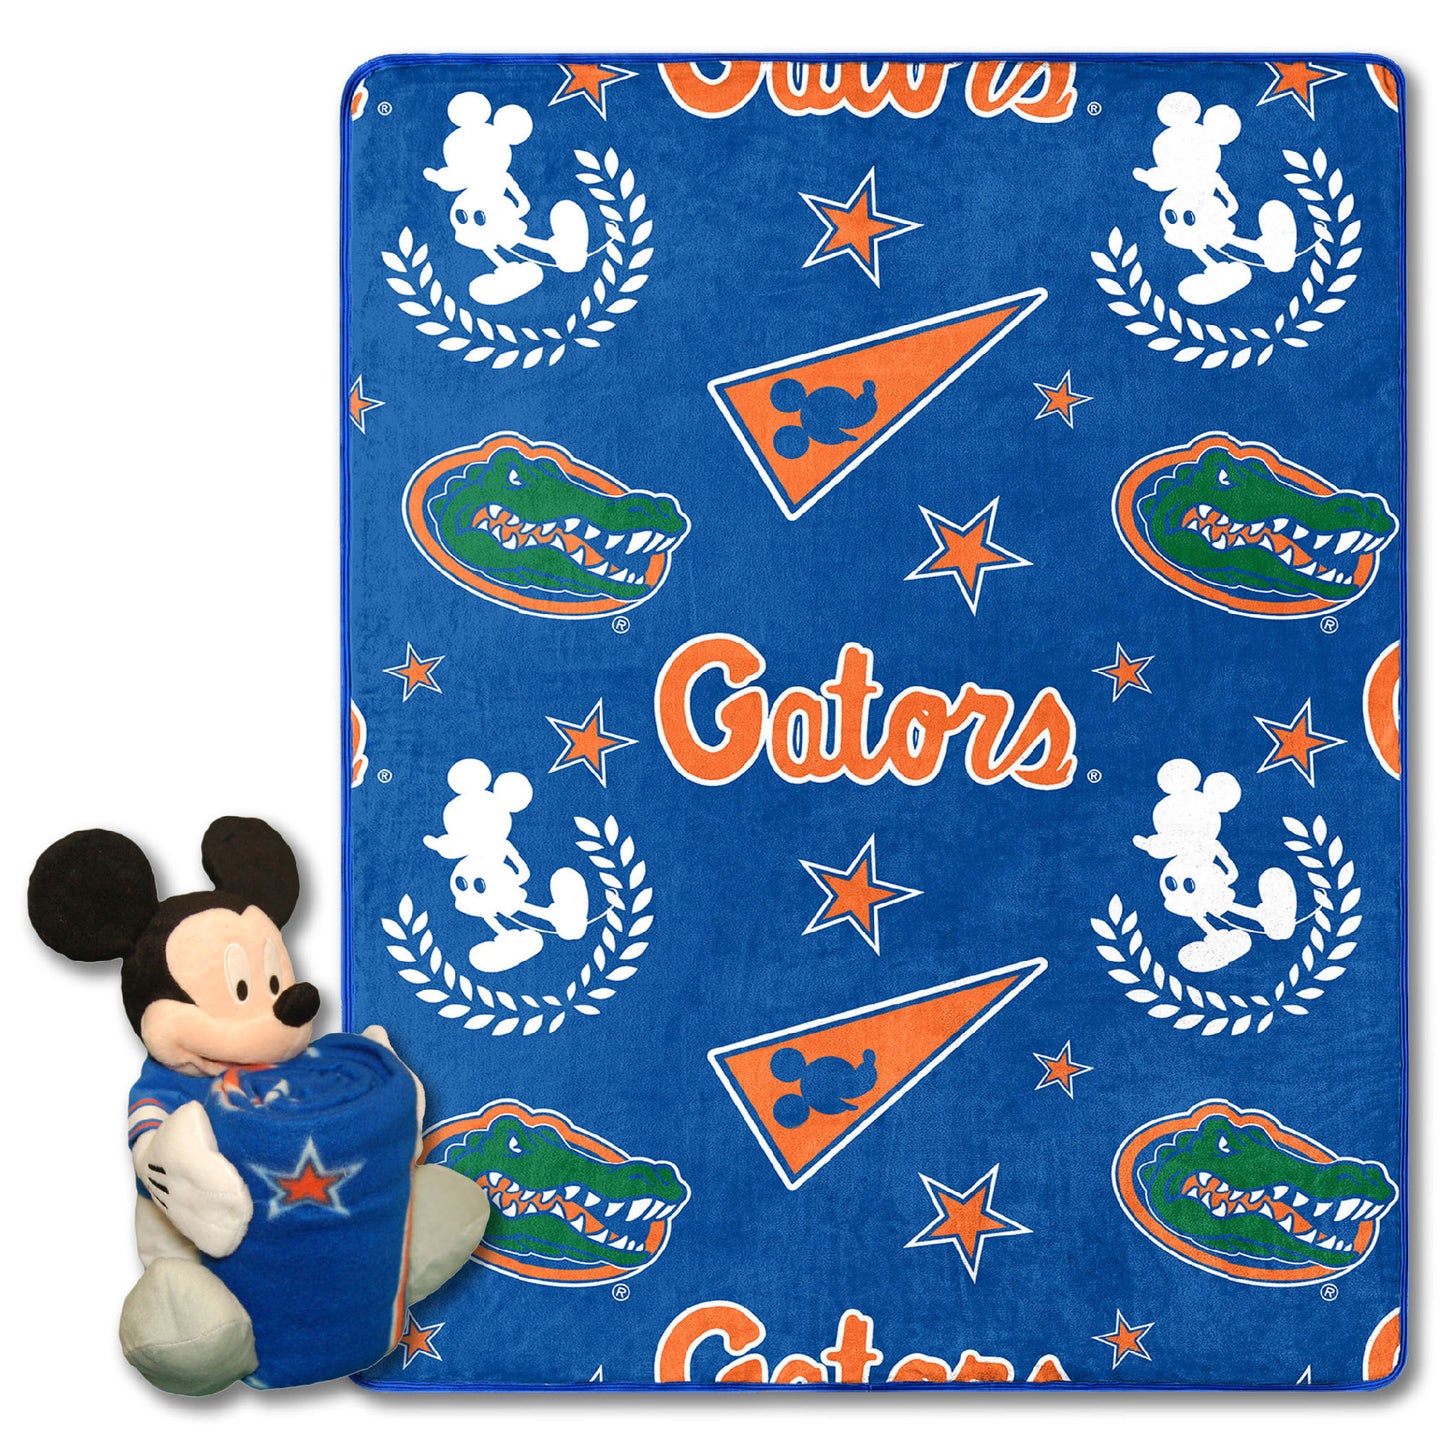 Florida OFFICIAL NCAA & Disney's Mickey Mouse Character Hugger Pillow & Silk Touch Throw Set